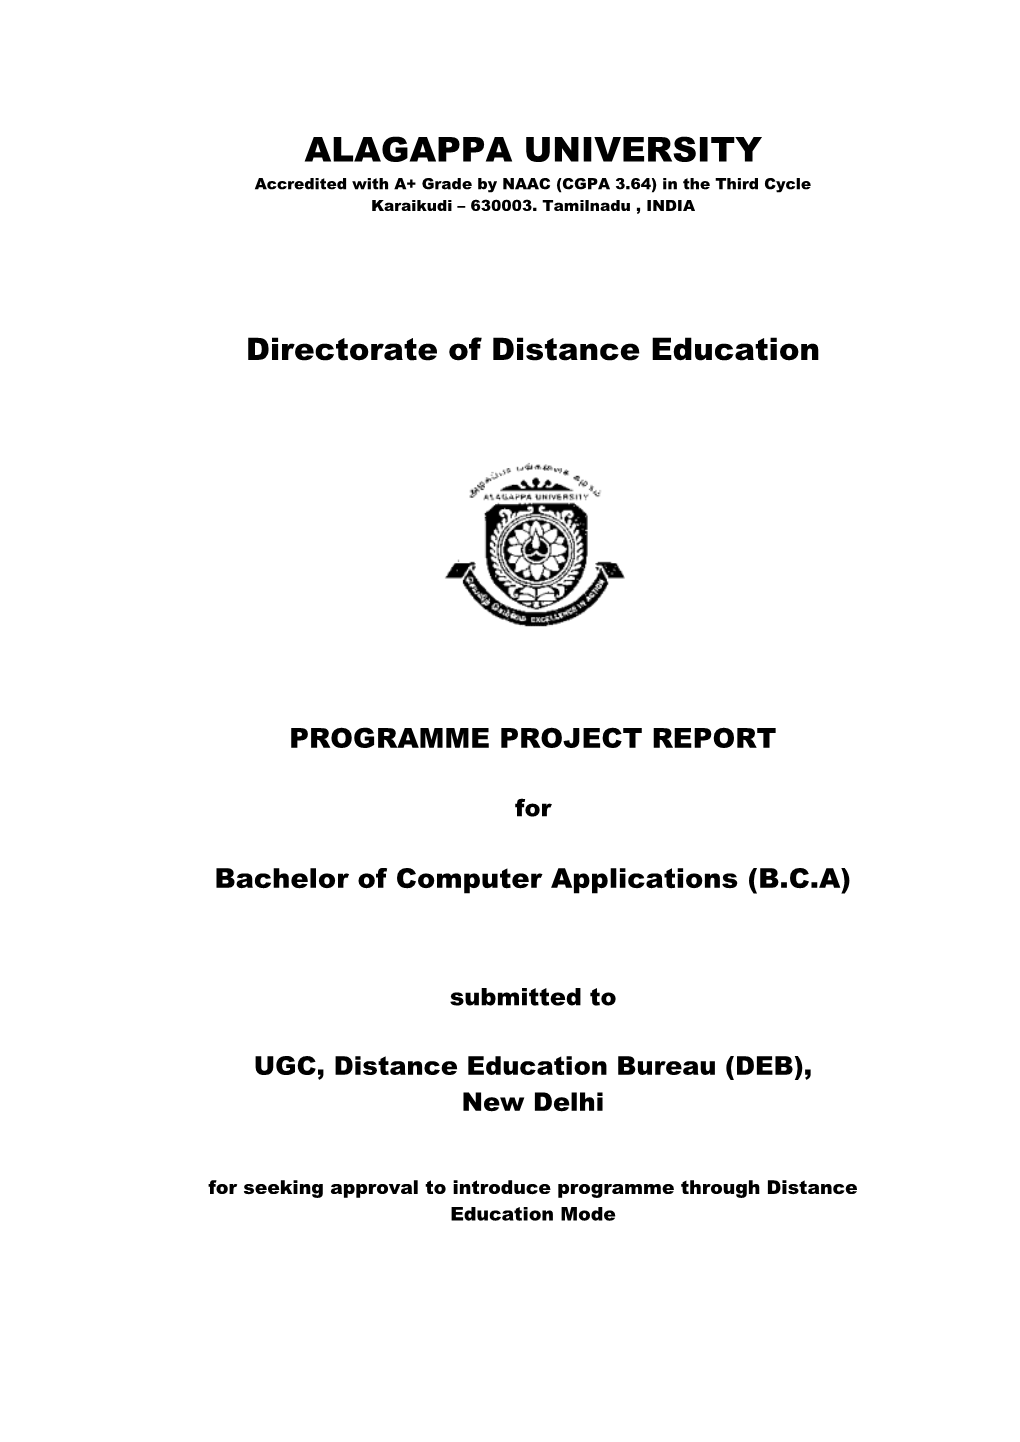 9.Bachelor of Computer Applications